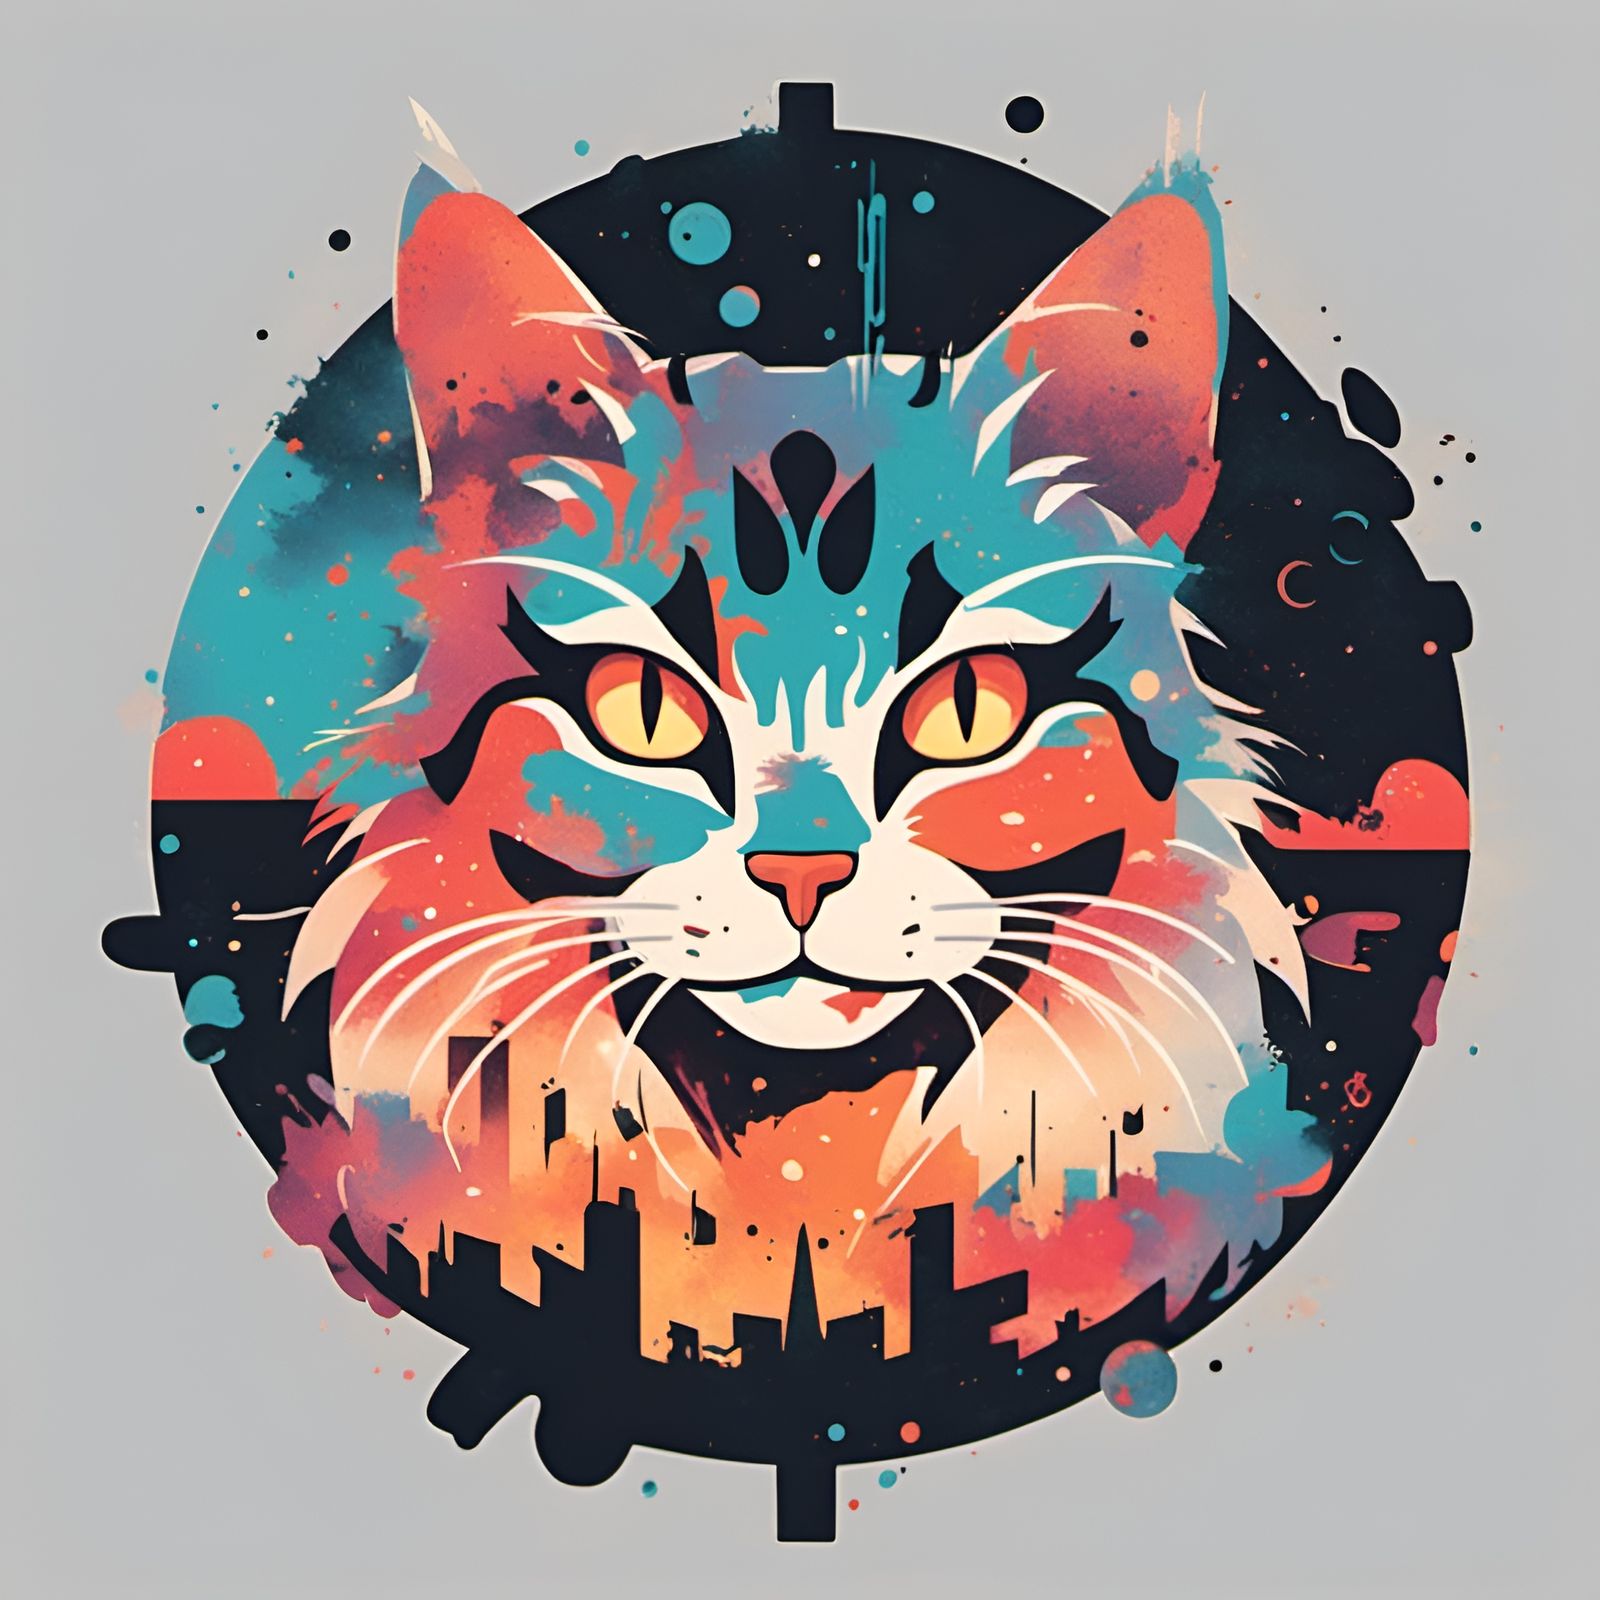 cat icon by 007NATALIIA on @creativemarket